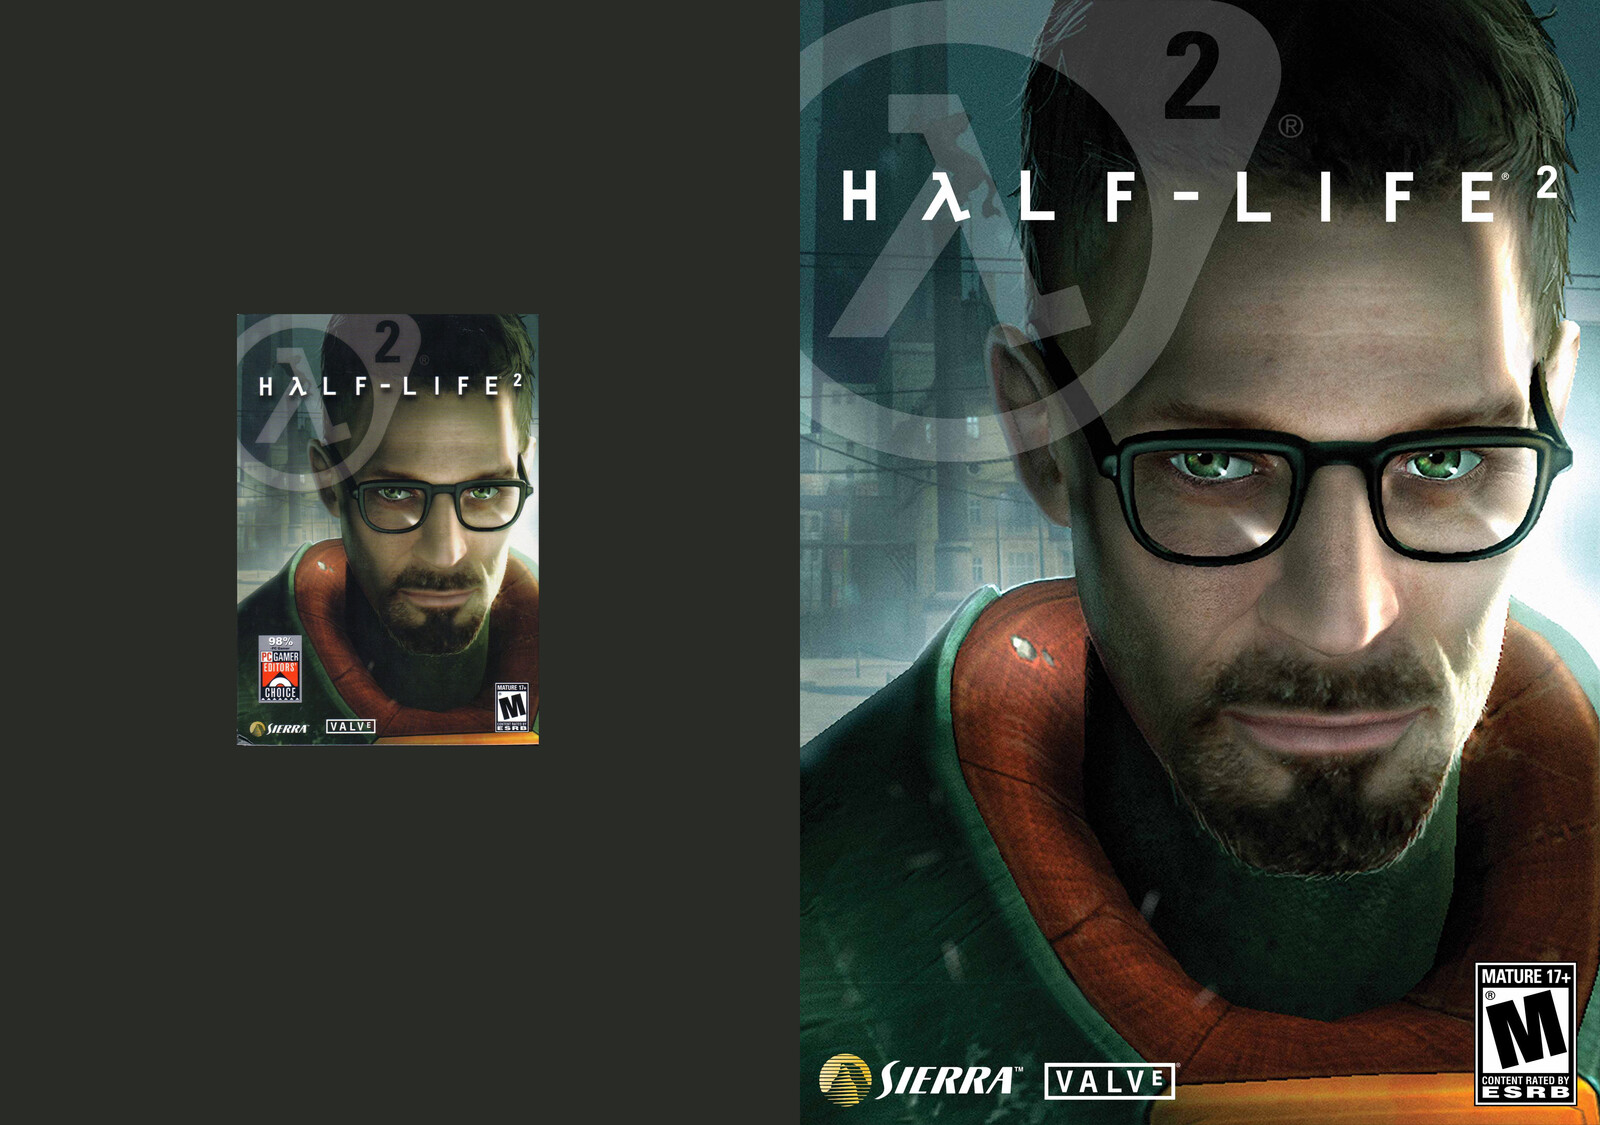 Half-Life 2 (original scan cover vs. retouched)